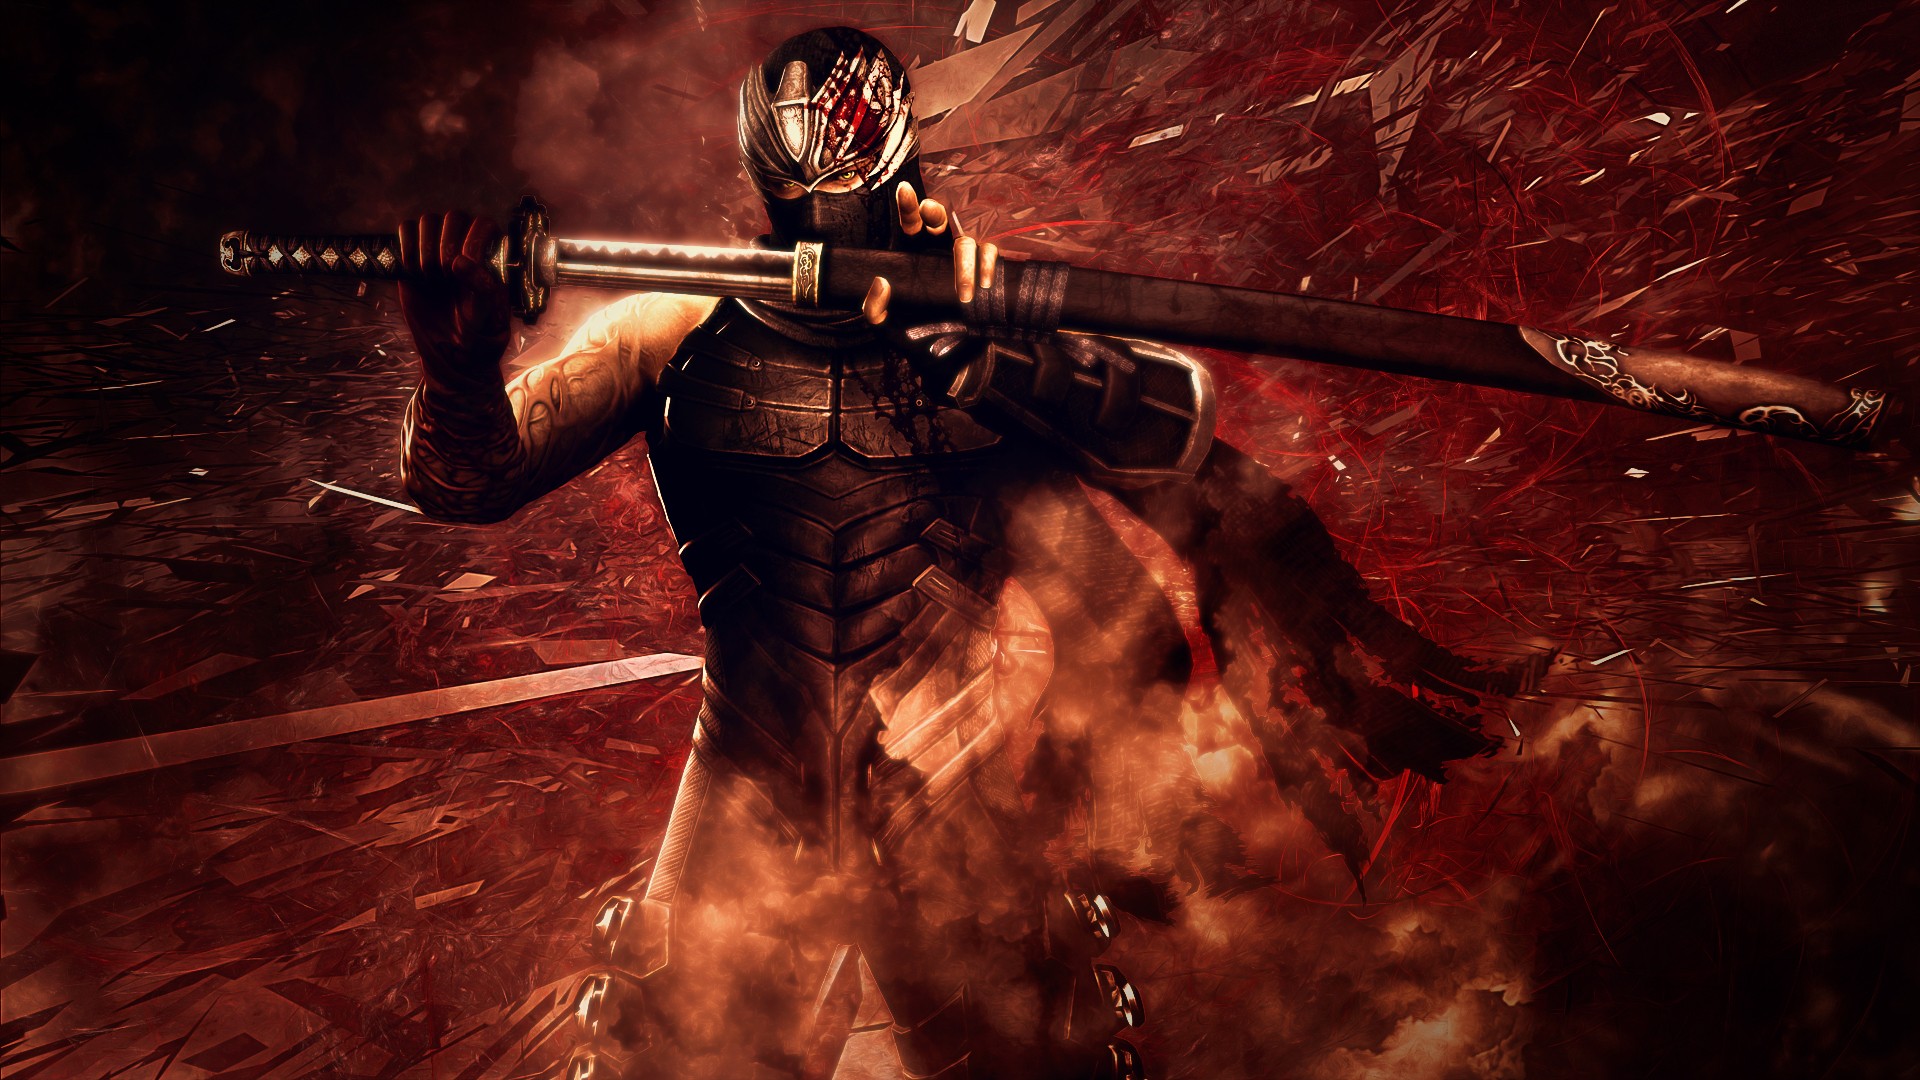 Ninja Gaiden Fantasy Anime Warrior Weapon Sword D Wallpaper Background